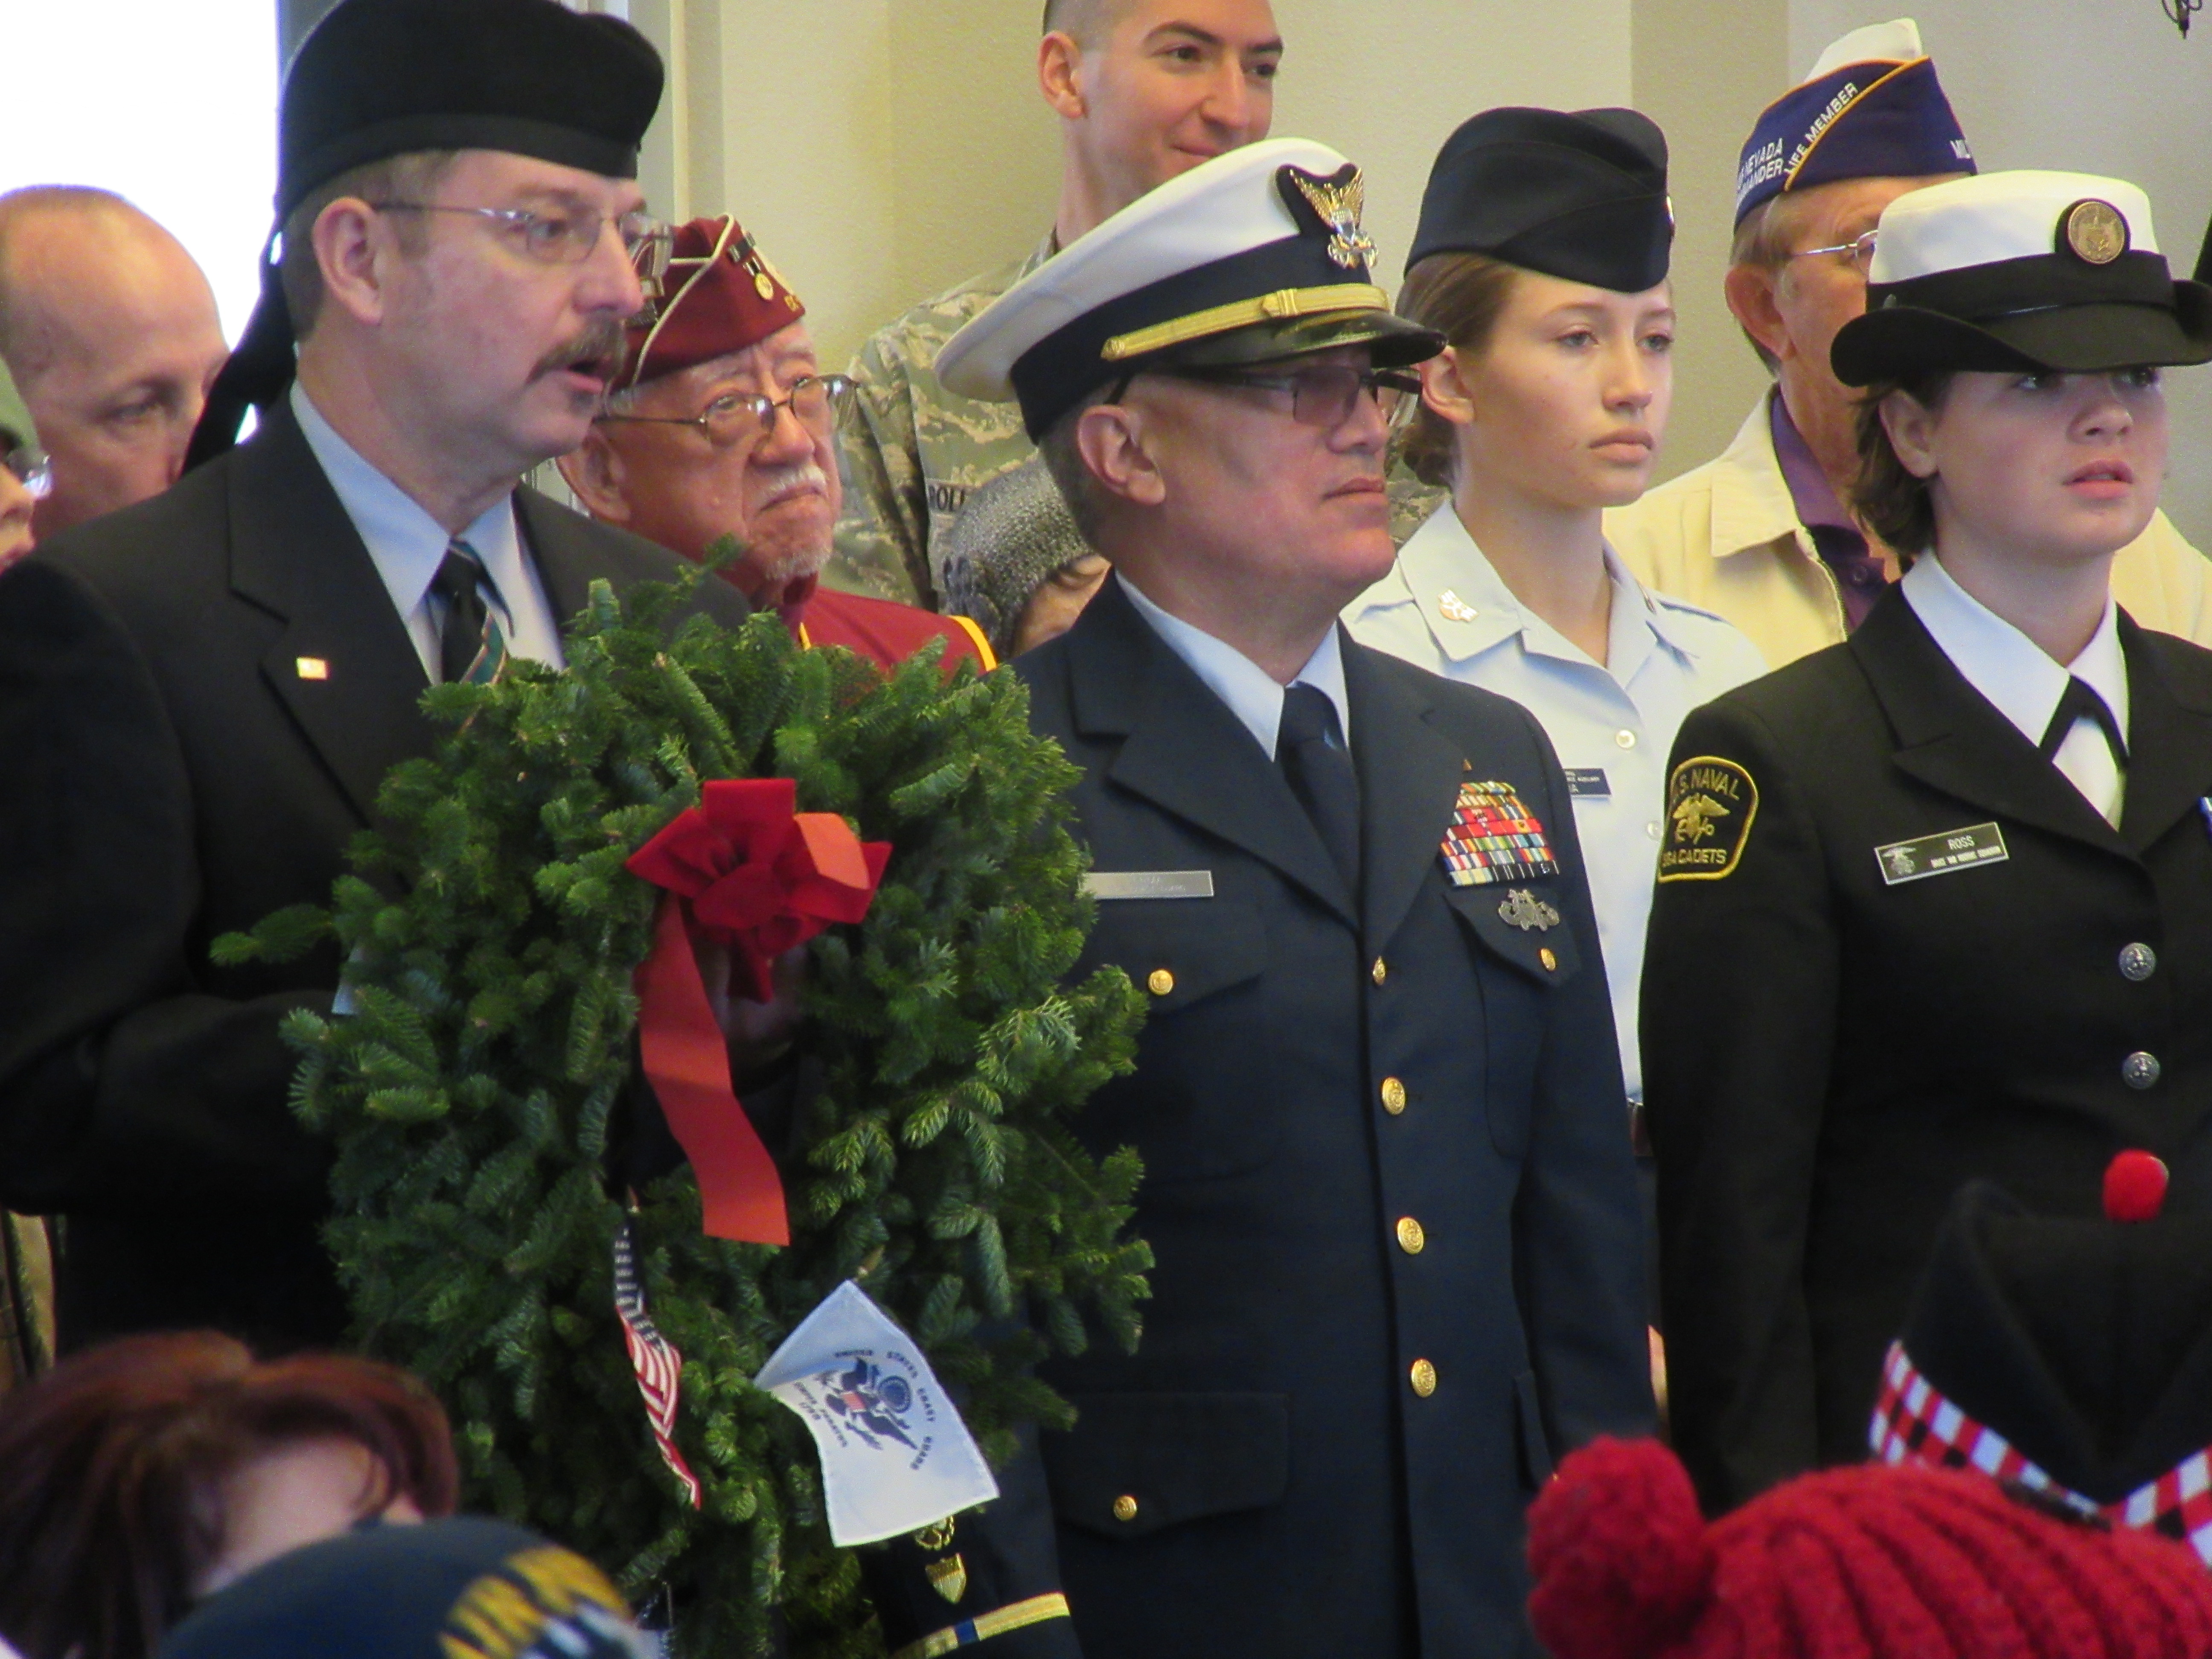 Wreaths Across America, NDVS Honor the Fallen